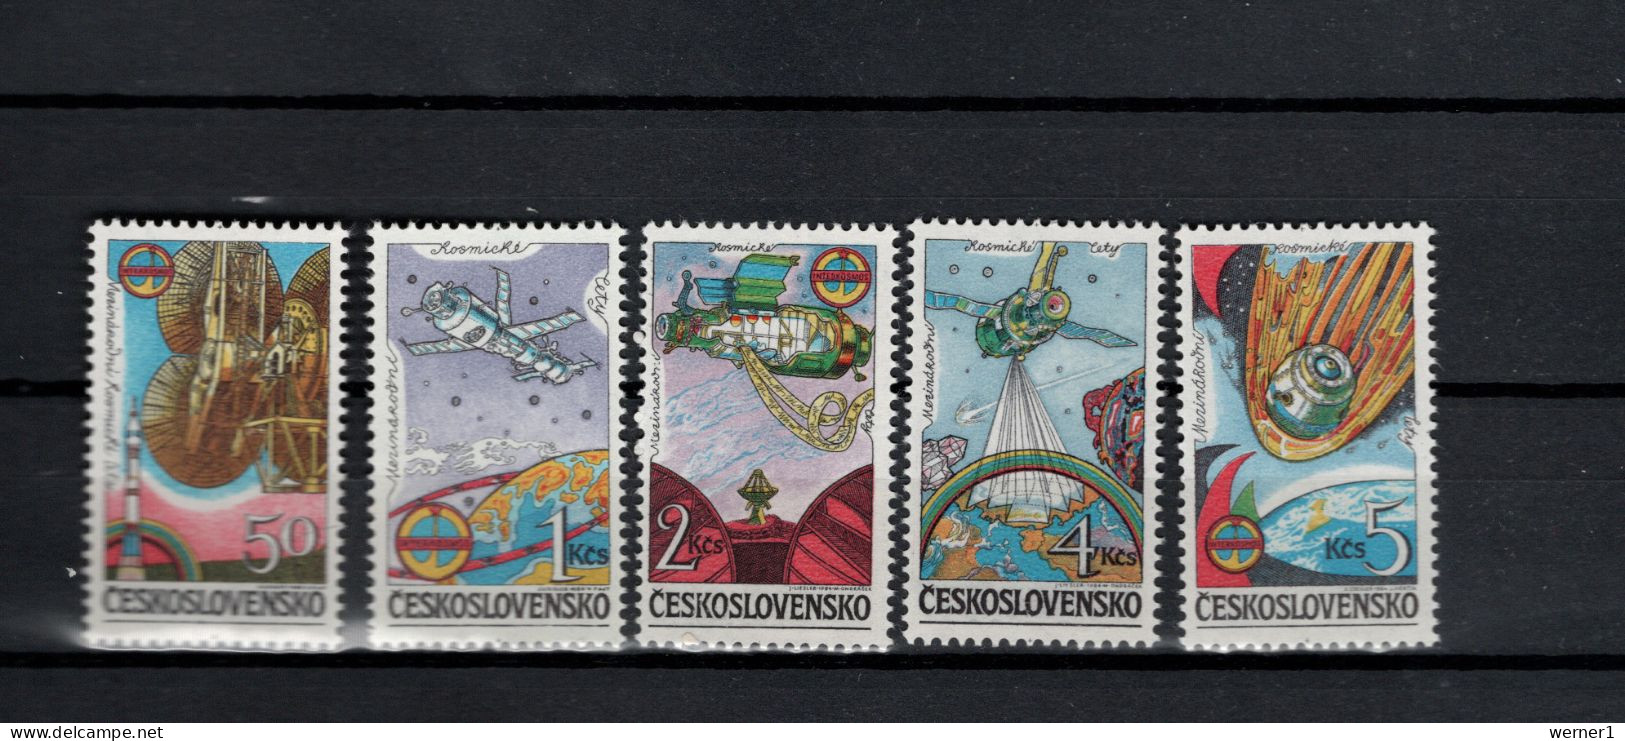 Czechoslovakia 1984 Space, Interkosmos Set Of 5 MNH - Europe